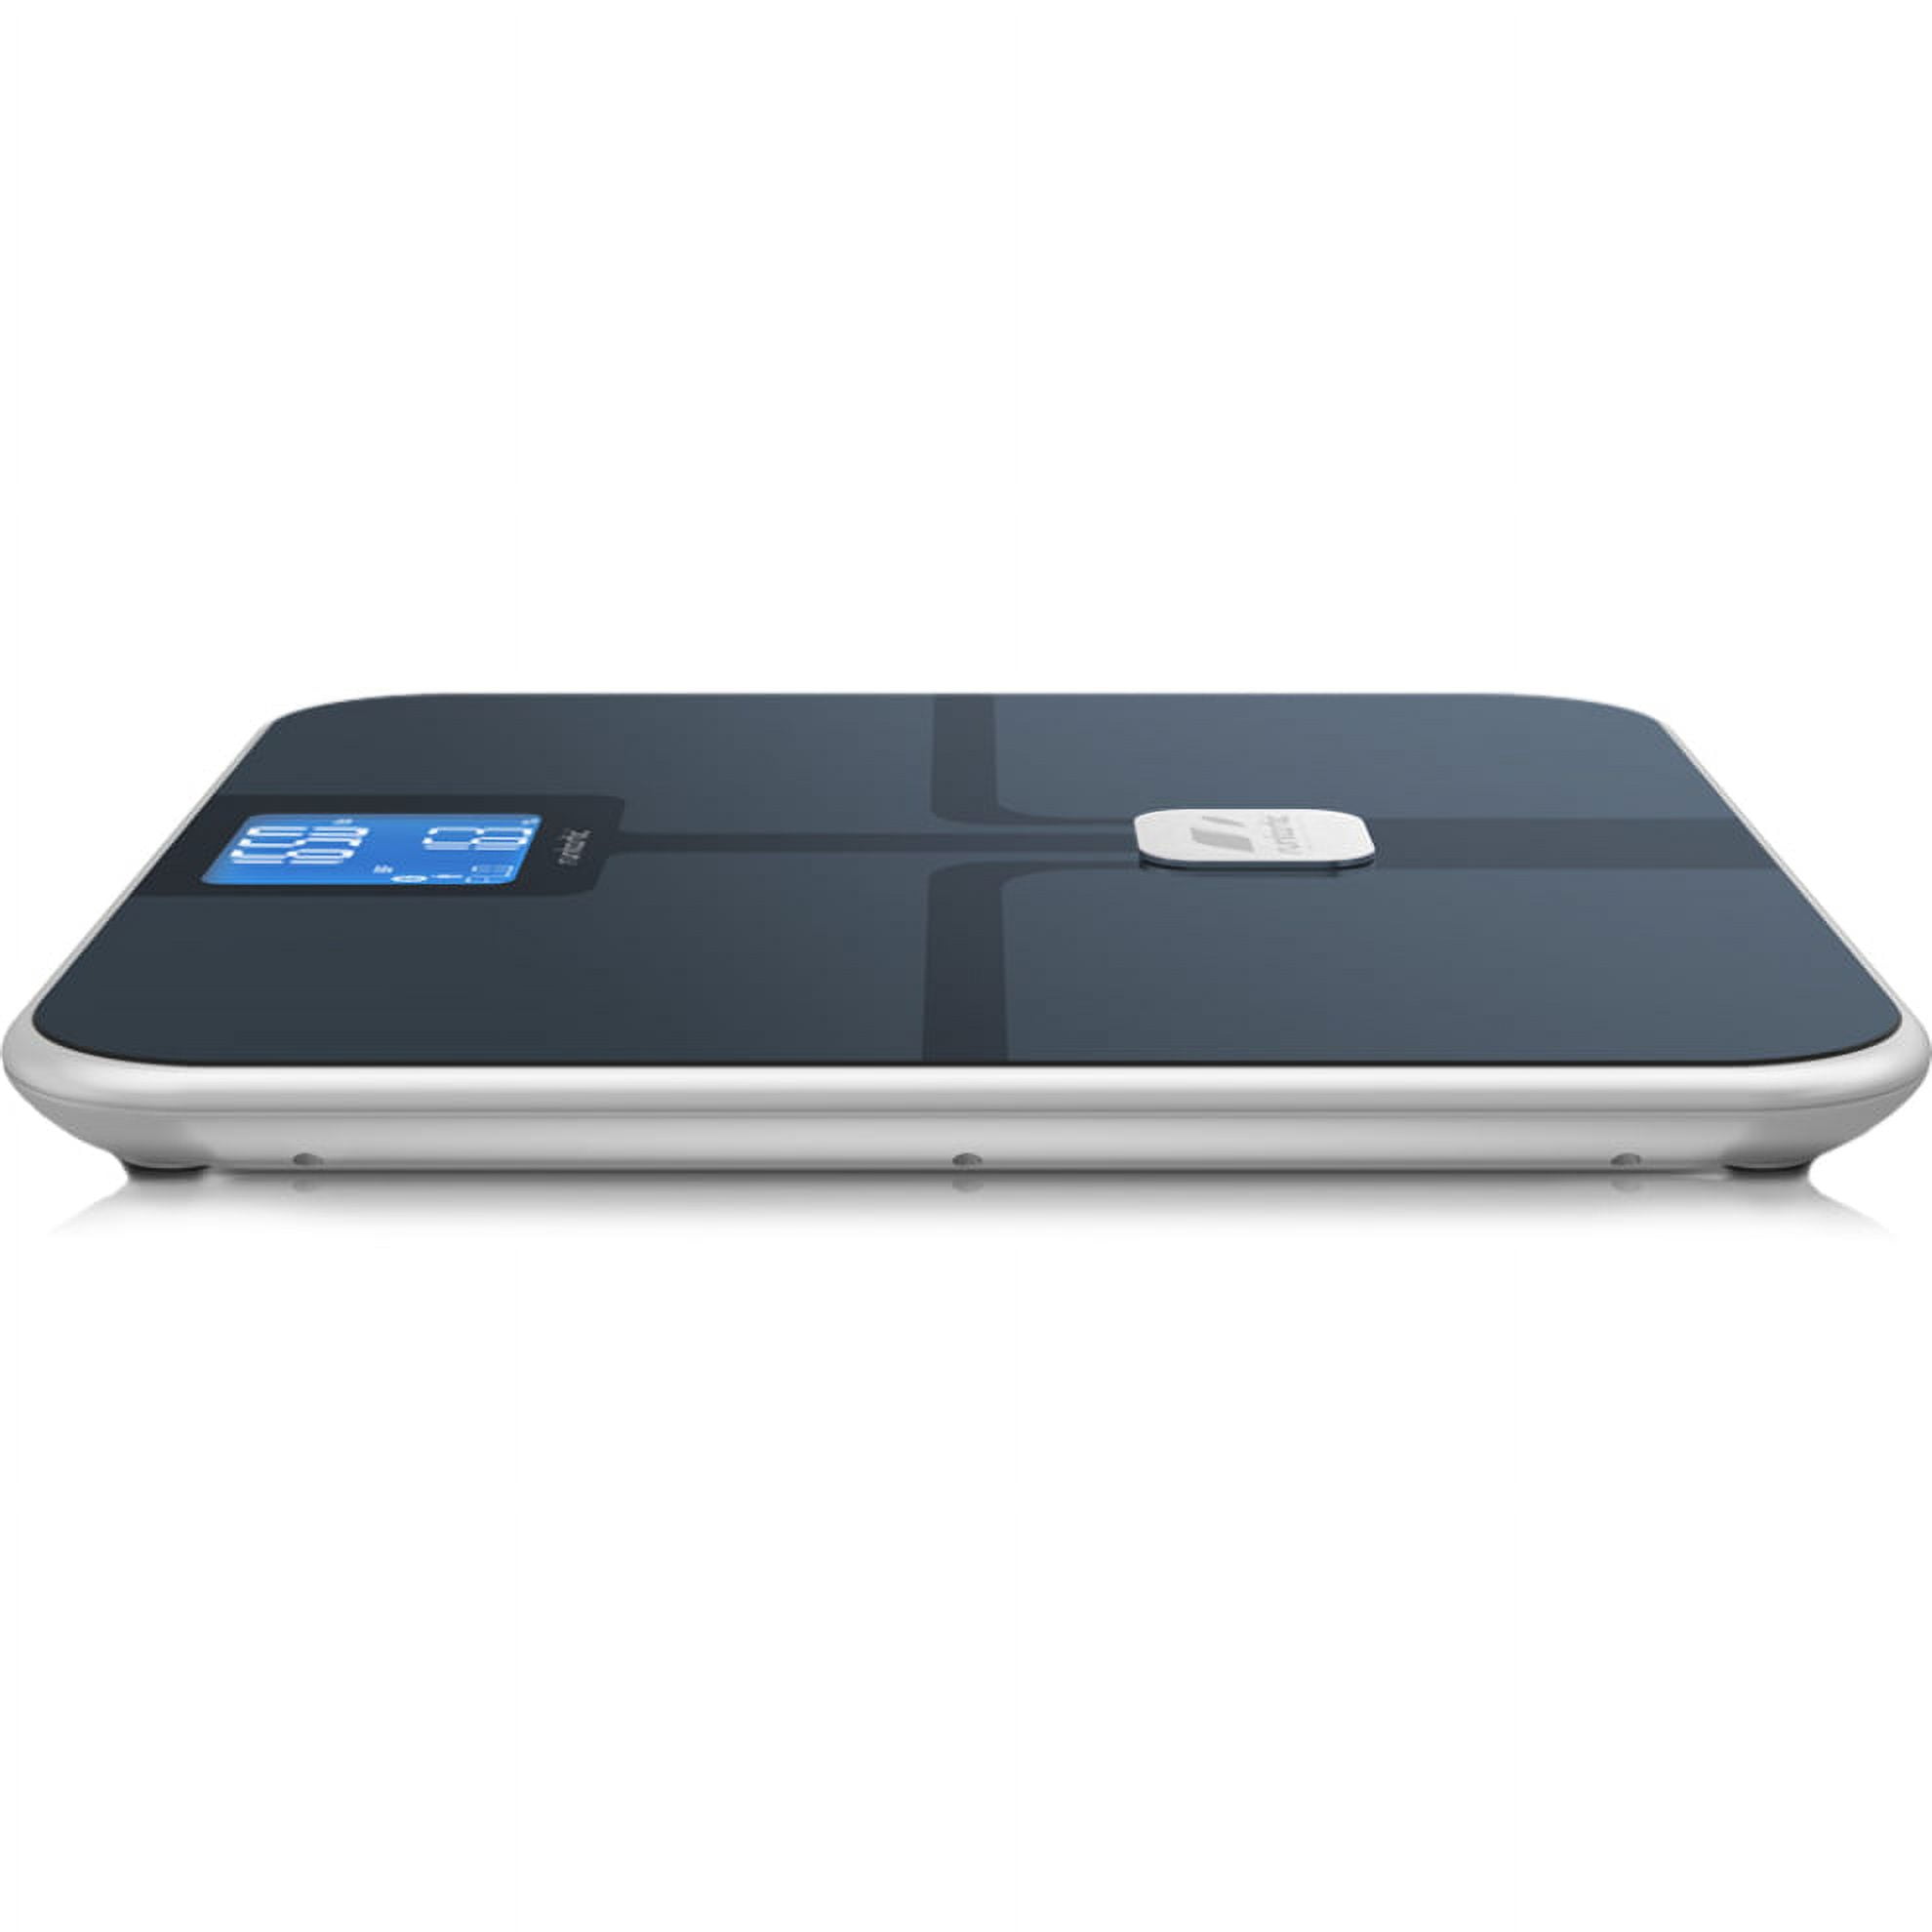 Runtastic Libra Bluetooth Smart Scale Review